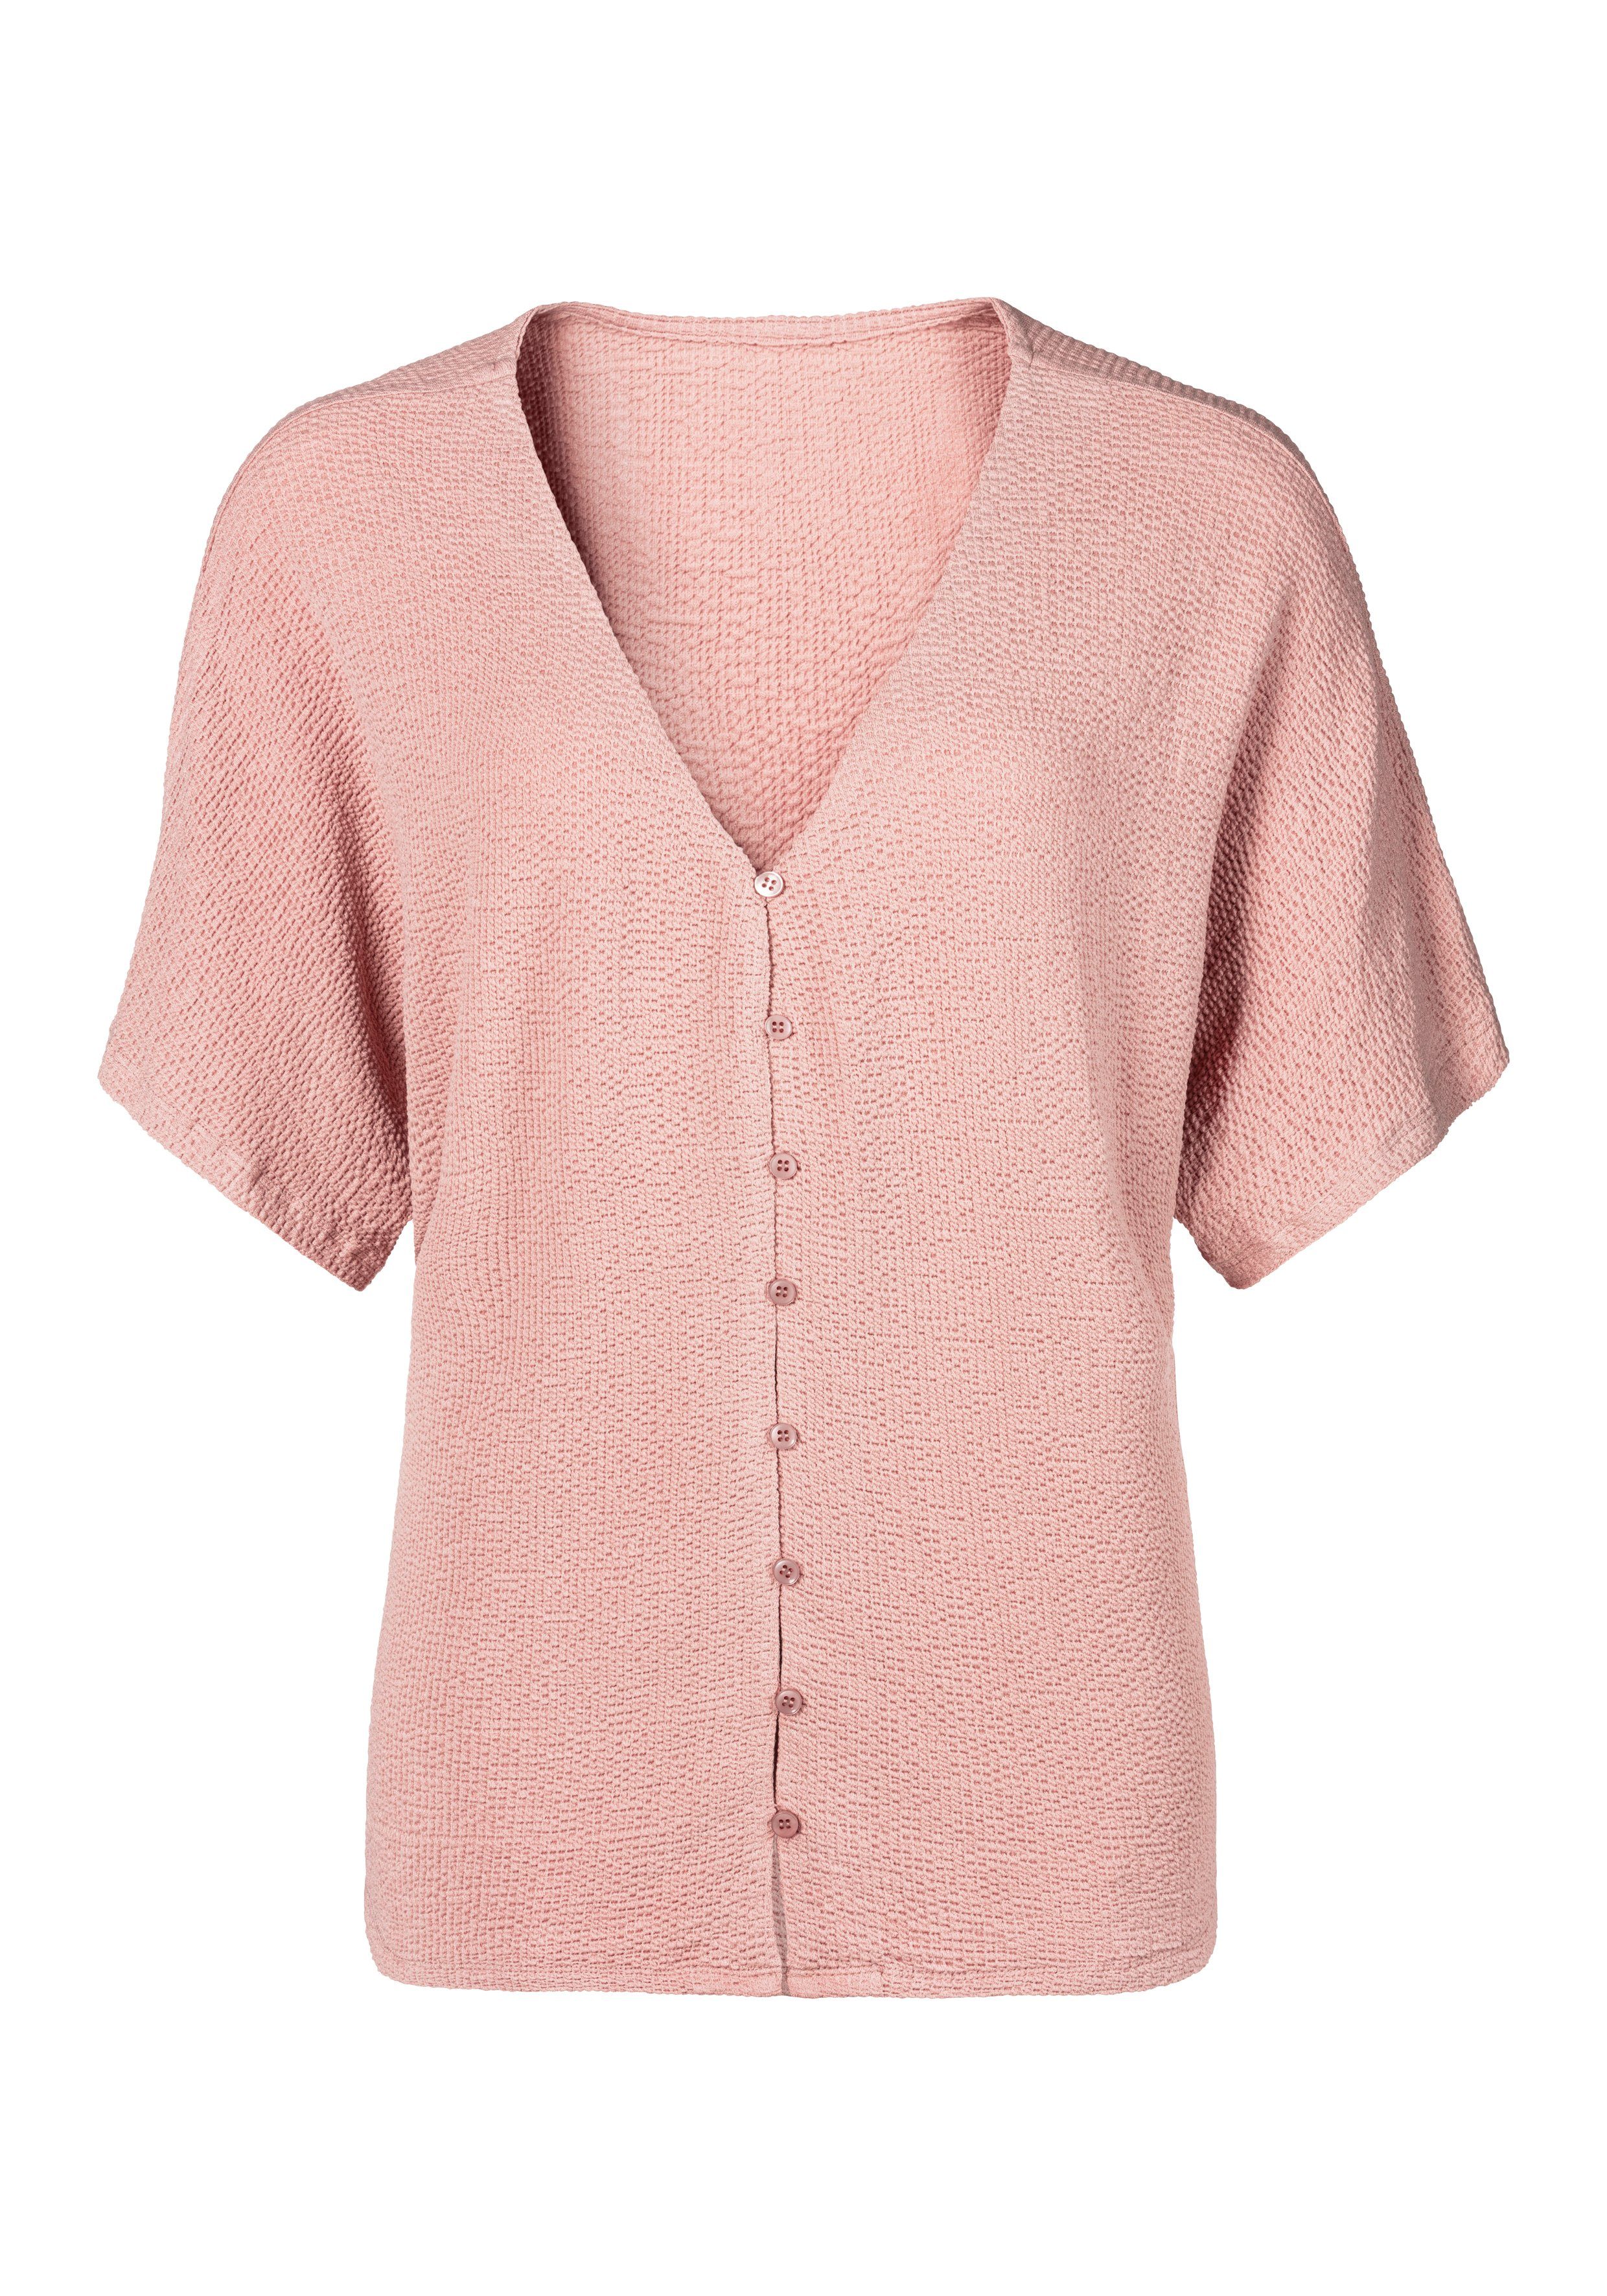 LASCANA T-Shirt aus strukturierter rosé Ware